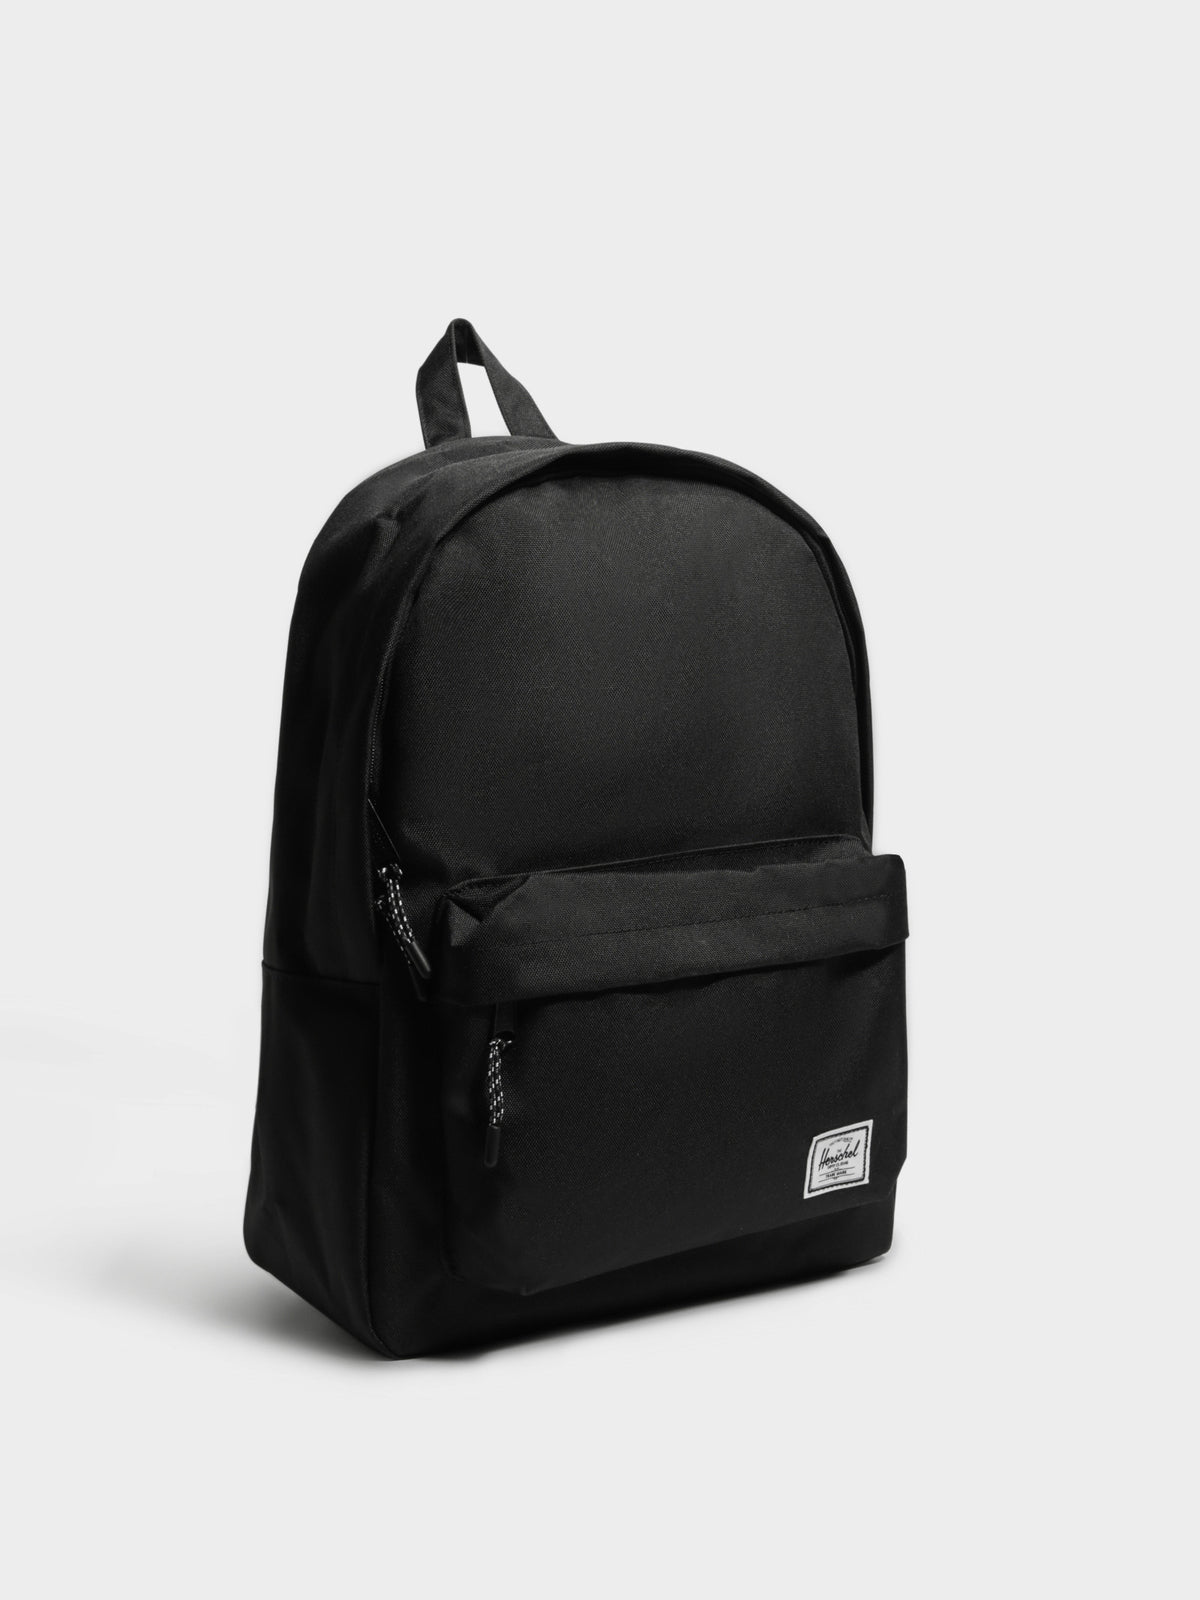 24L Classic Backpack in Black